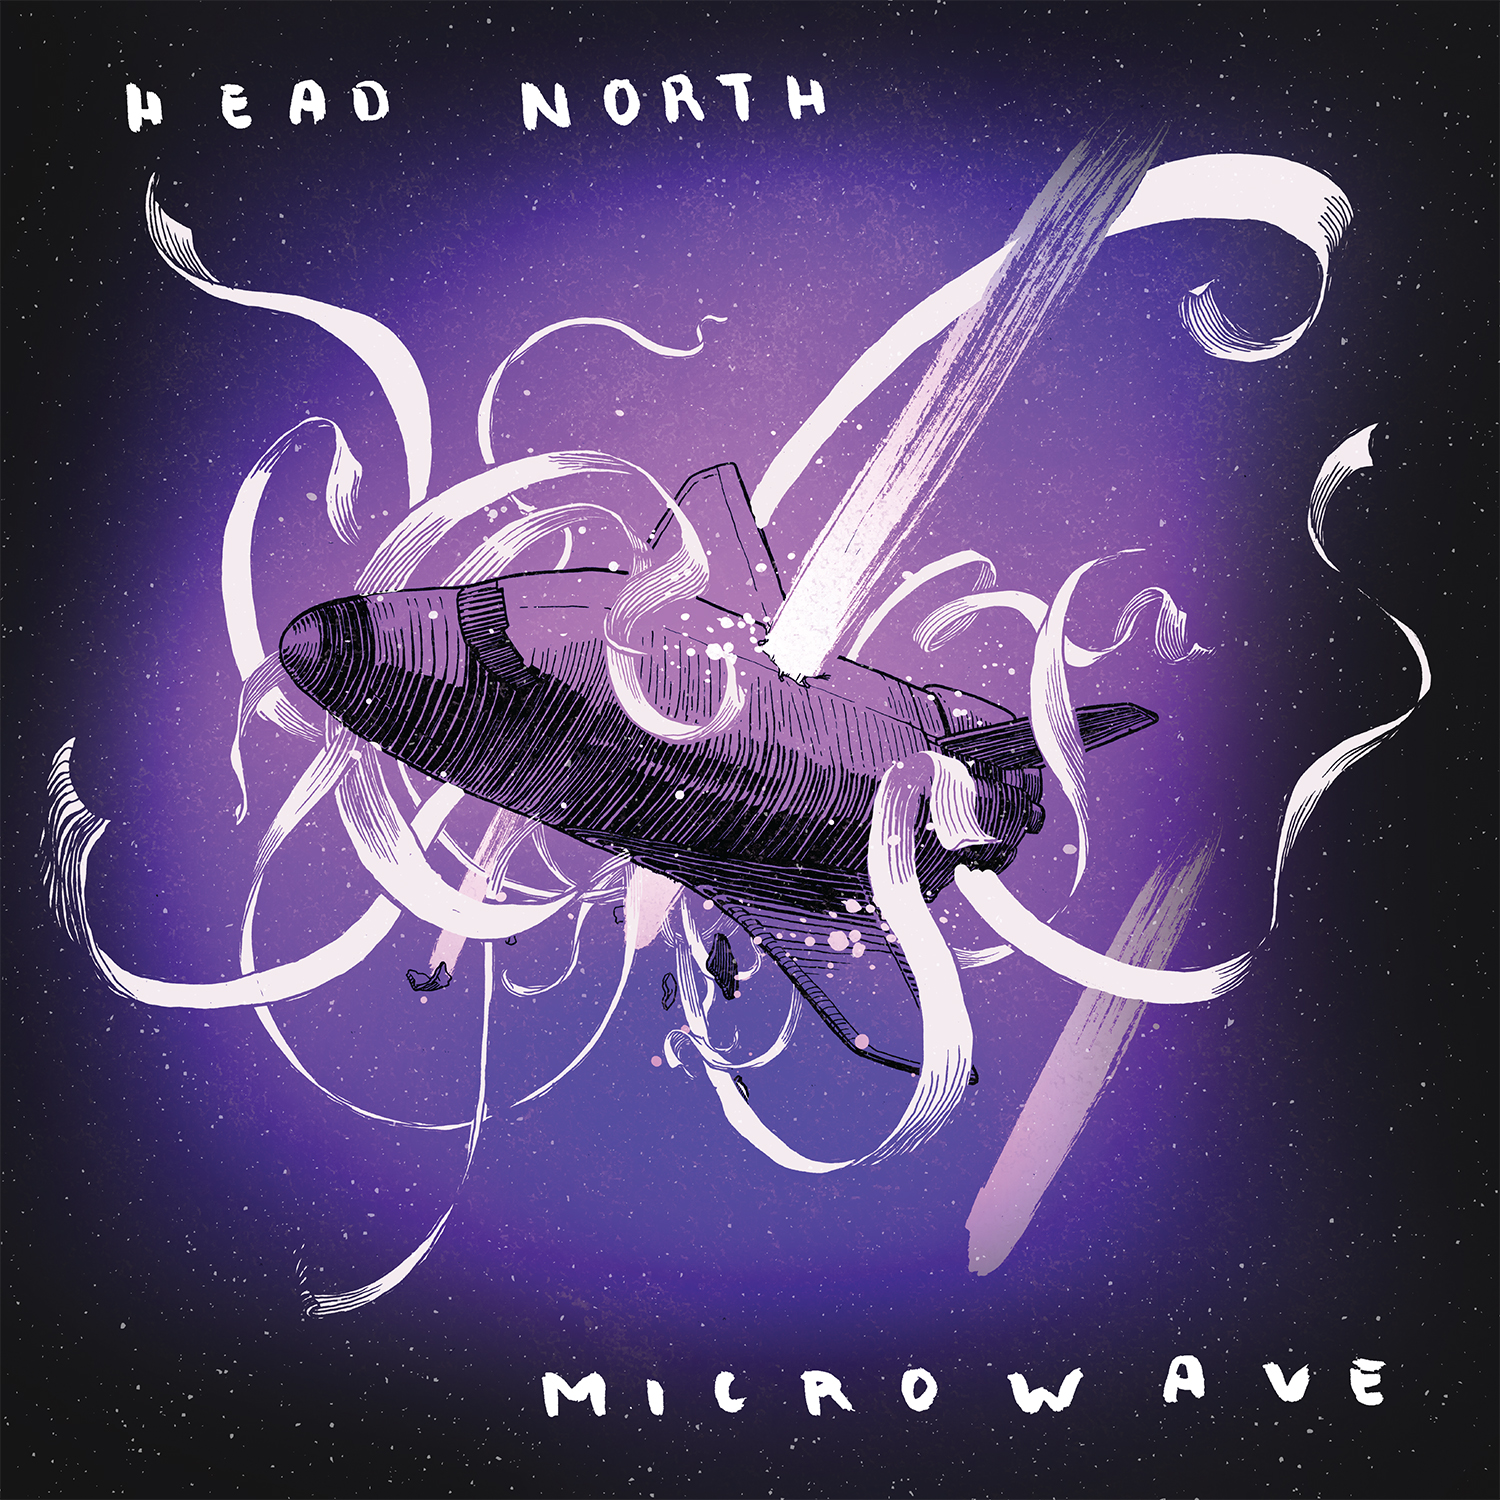 Head North x Microwave split